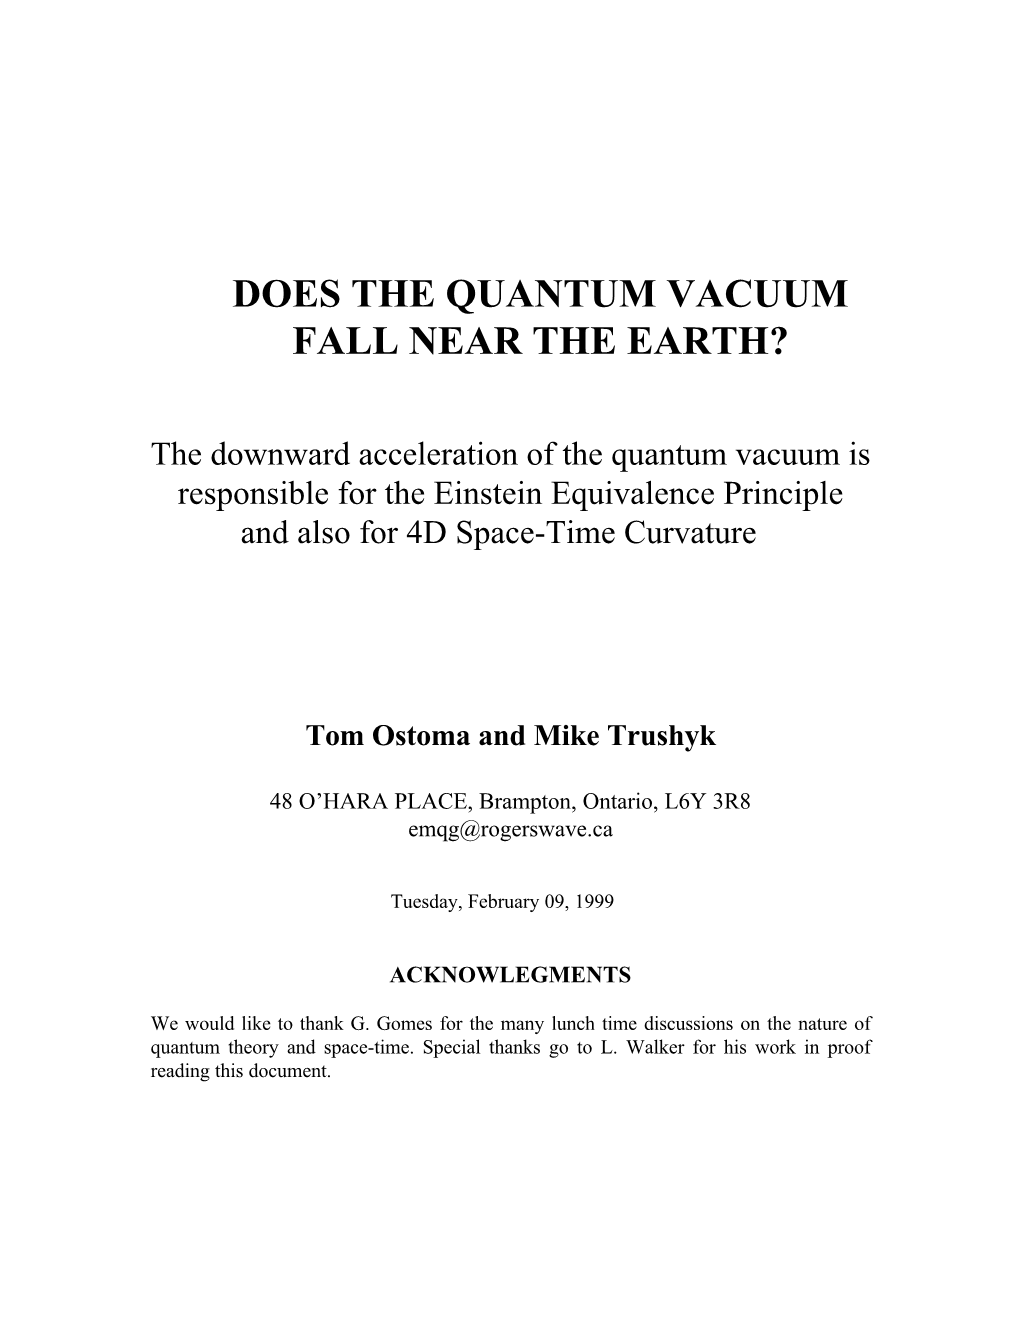 Does the Quantum Vacuum Fall Near the Earth?